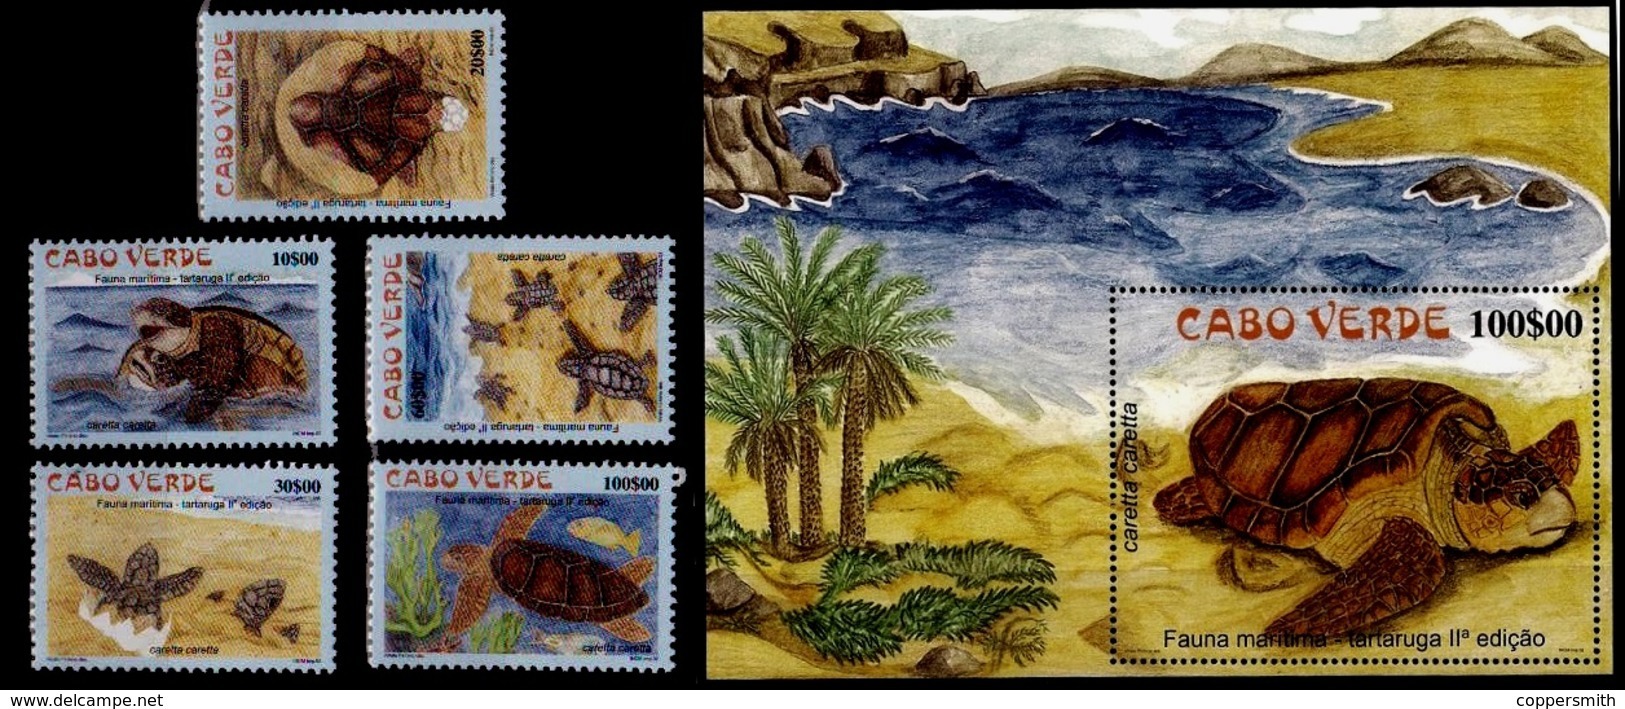 (060-61) Cape Verde / Cabo Verde  Tortoises / Tortues / Turtles / Schildkröten / 2002 ** / Mnh  Michel 809-13 + BL 35 - Cape Verde